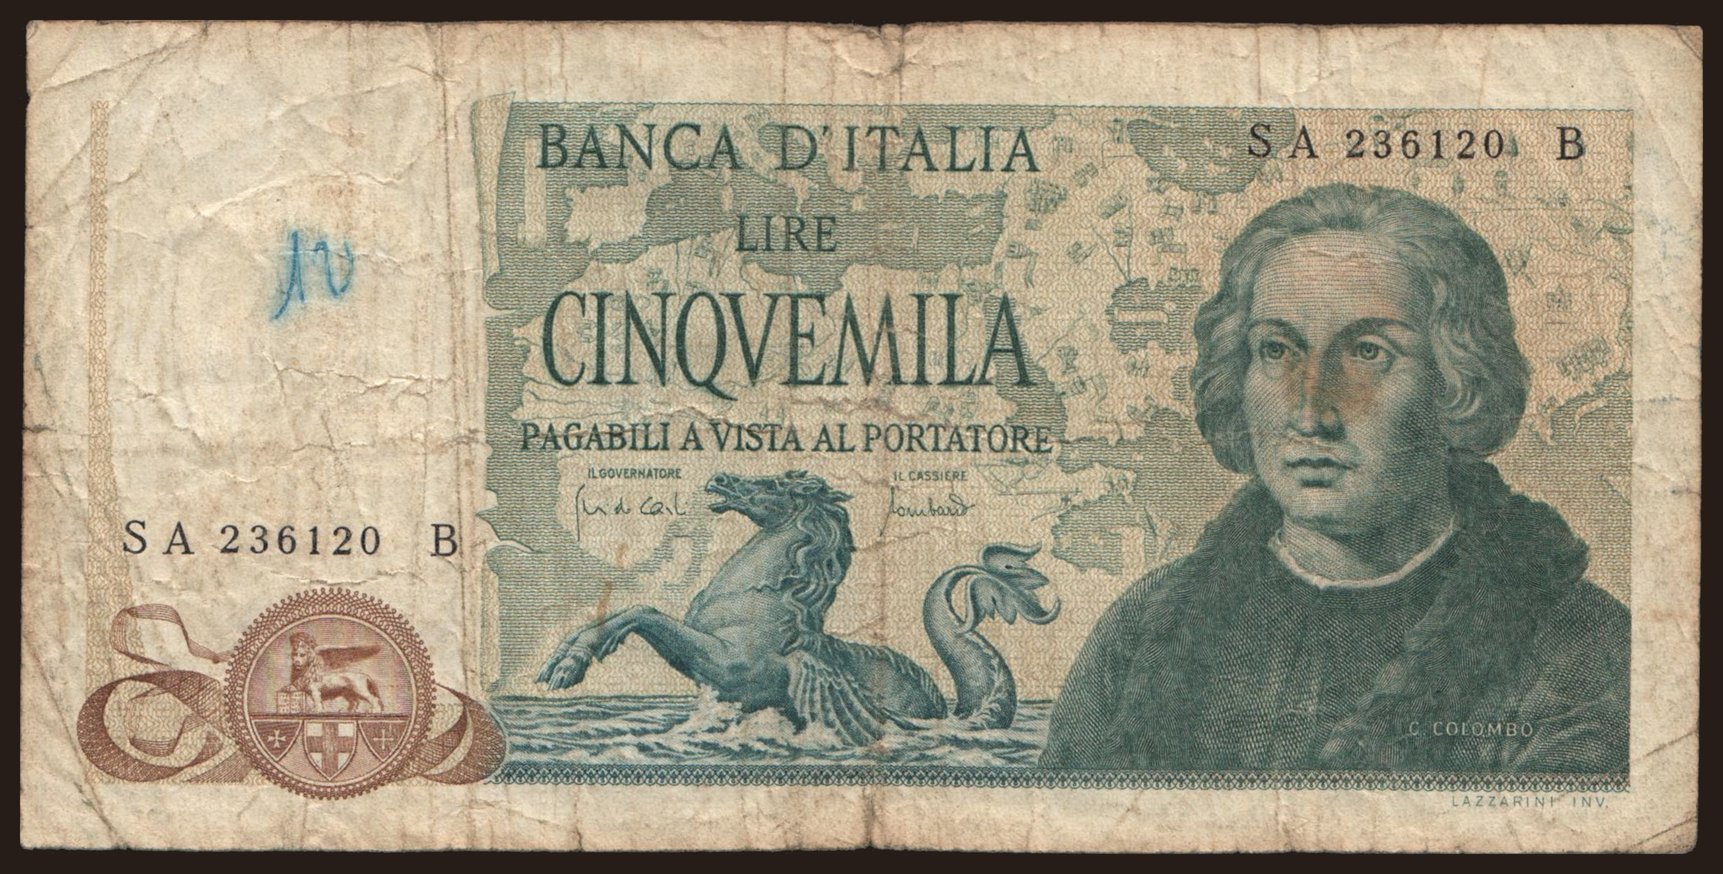 5000 lire, 1971